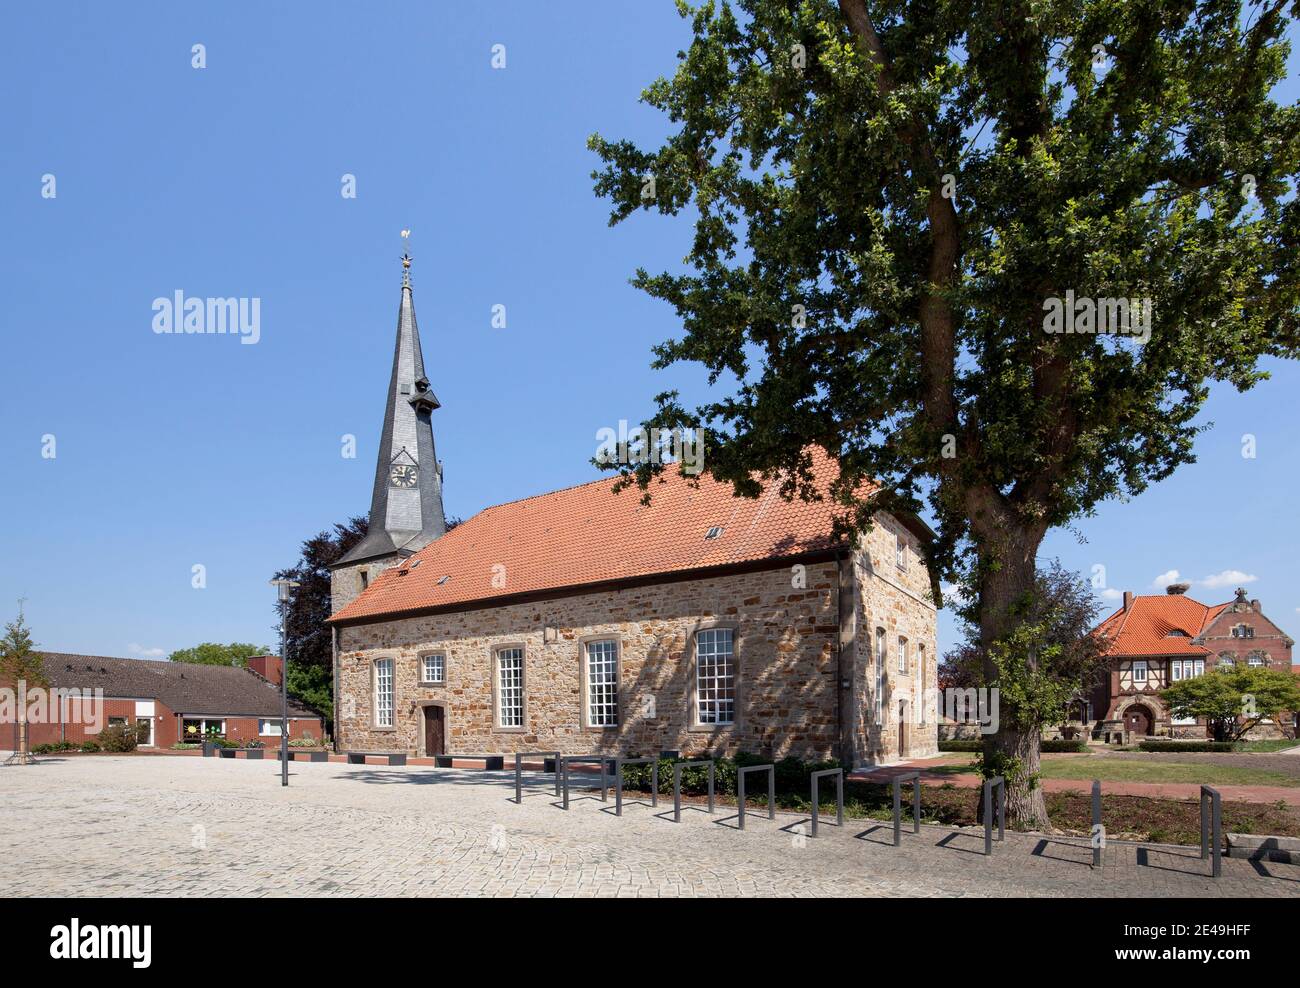 Villaggio chiesa, Rehburg, Steinhuder Meer, regione di Hannover Foto Stock